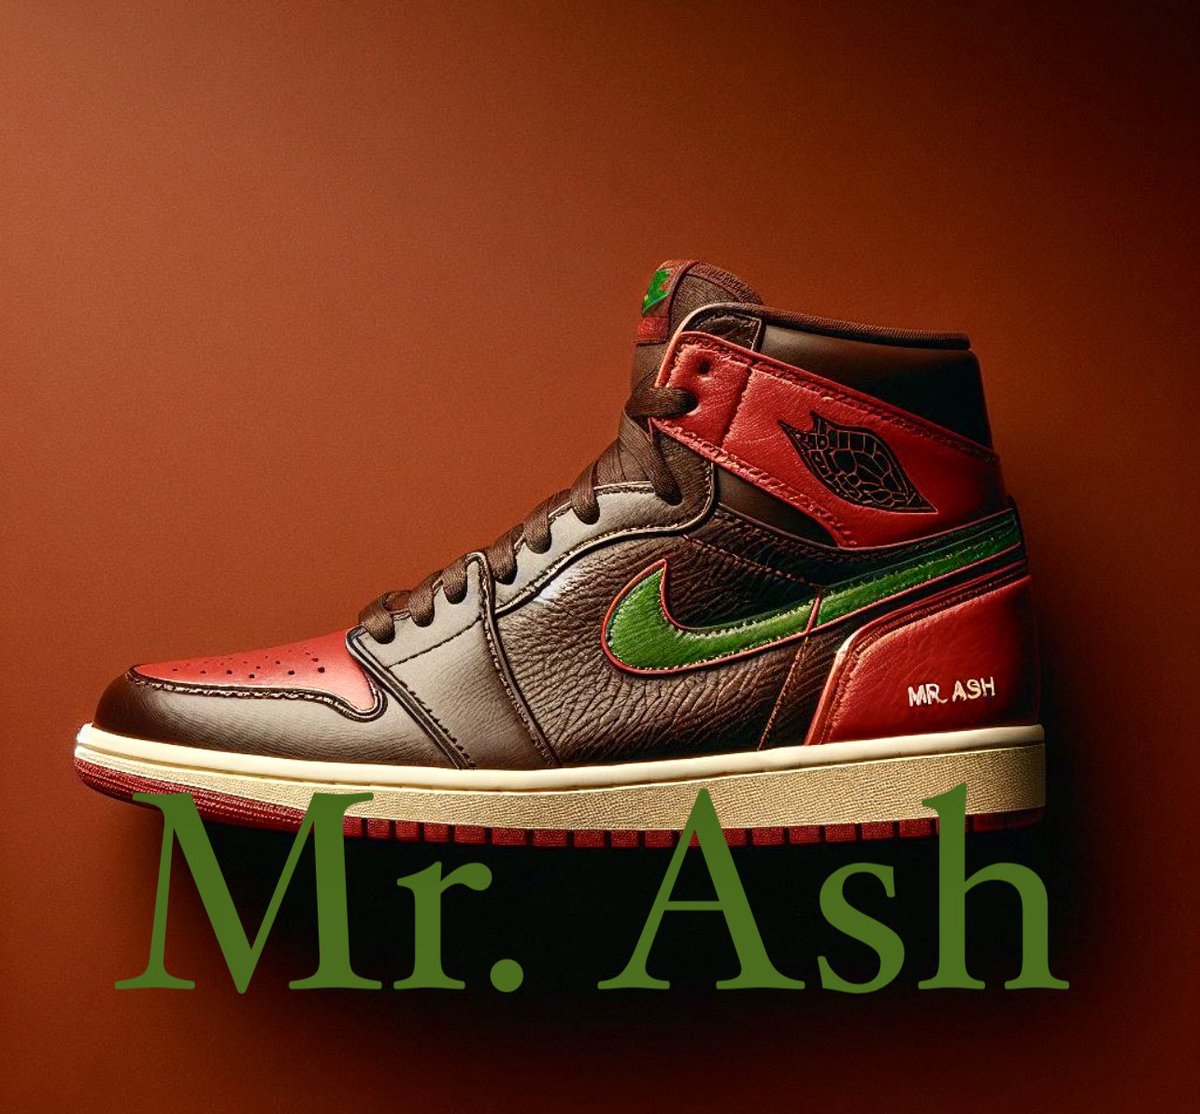 Mr. ASH

#themrash #mrashsneakers #SNKRS